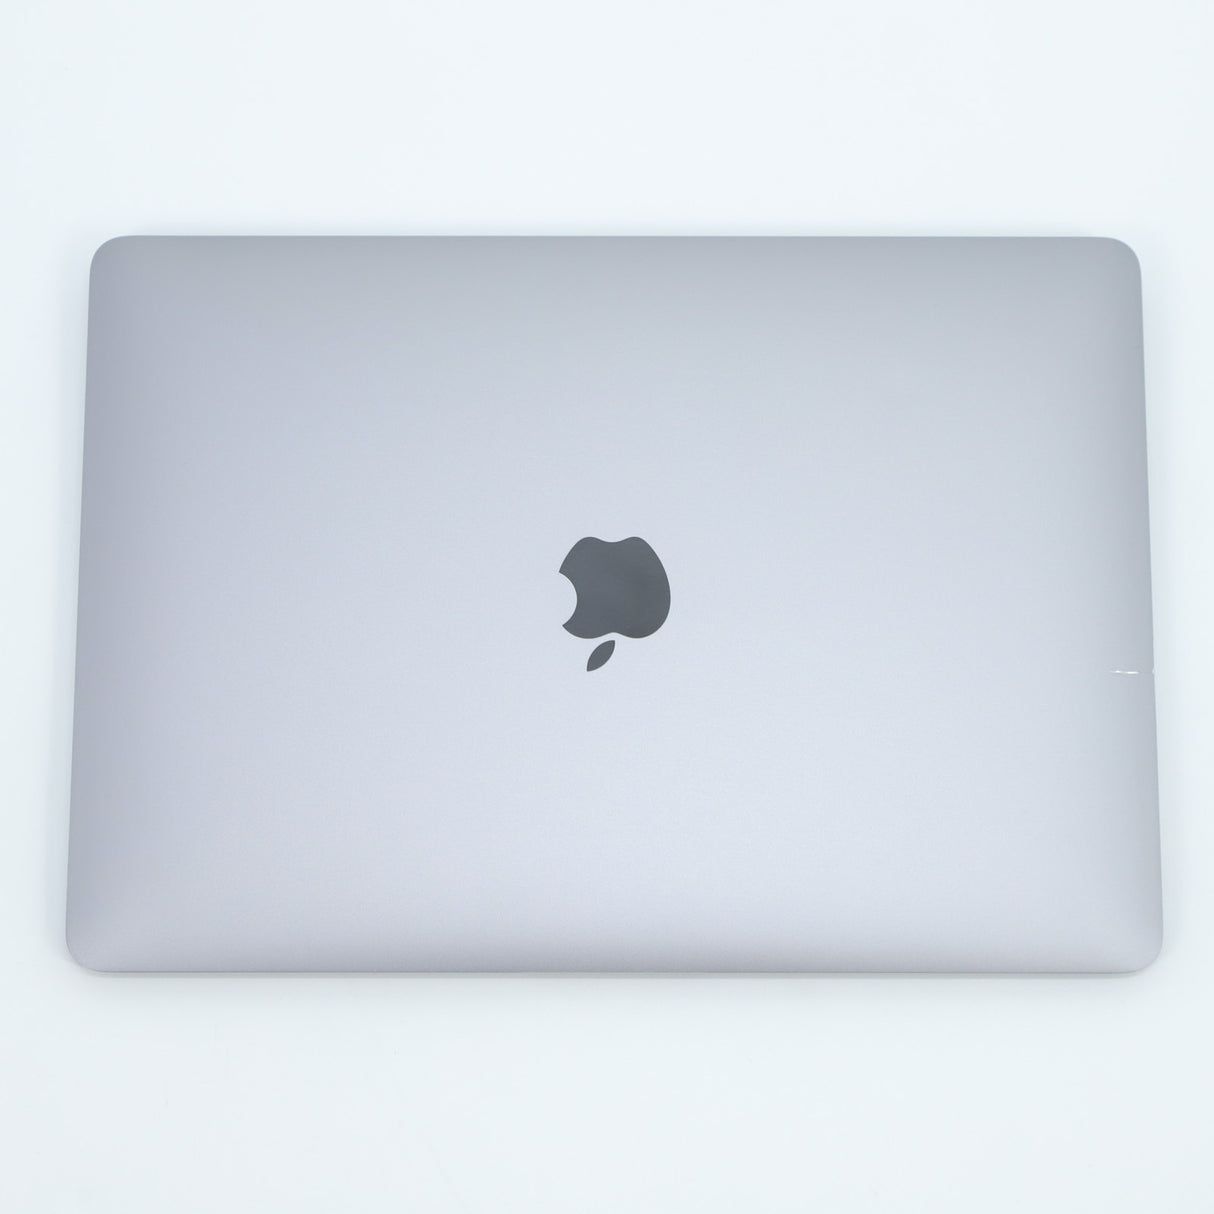 Apple MacBook Air 13.3" Retina: M1 Chip, Silver, 8GB RAM, 256GB SSD Warranty VAT - GreenGreen Store